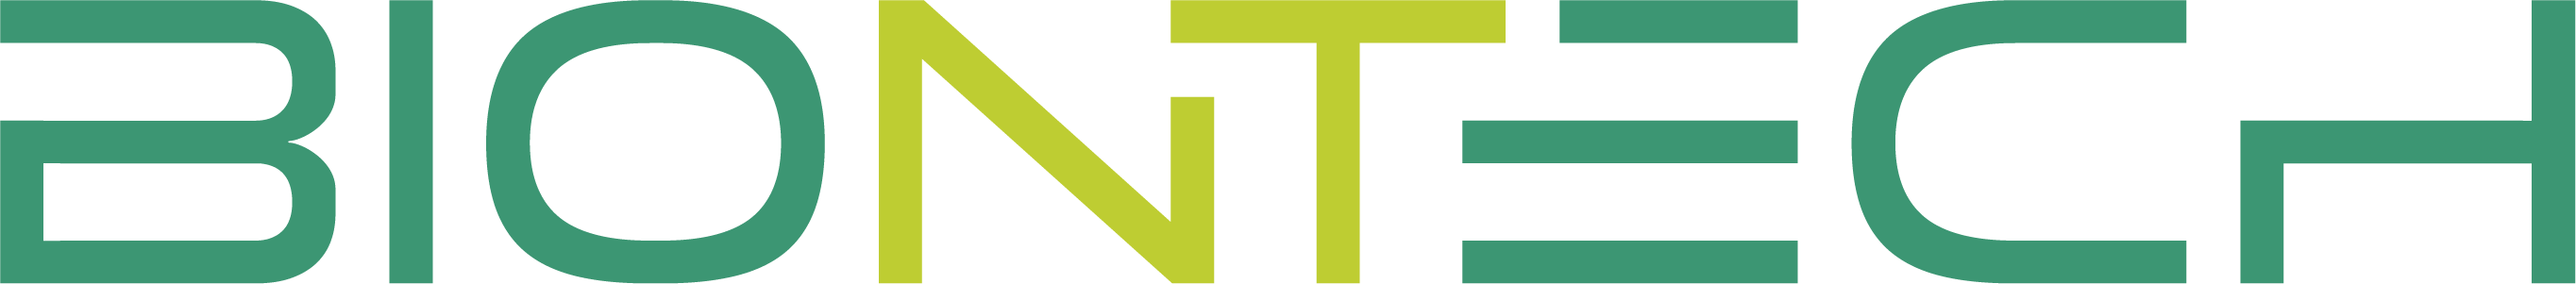 biontech_(logo).png